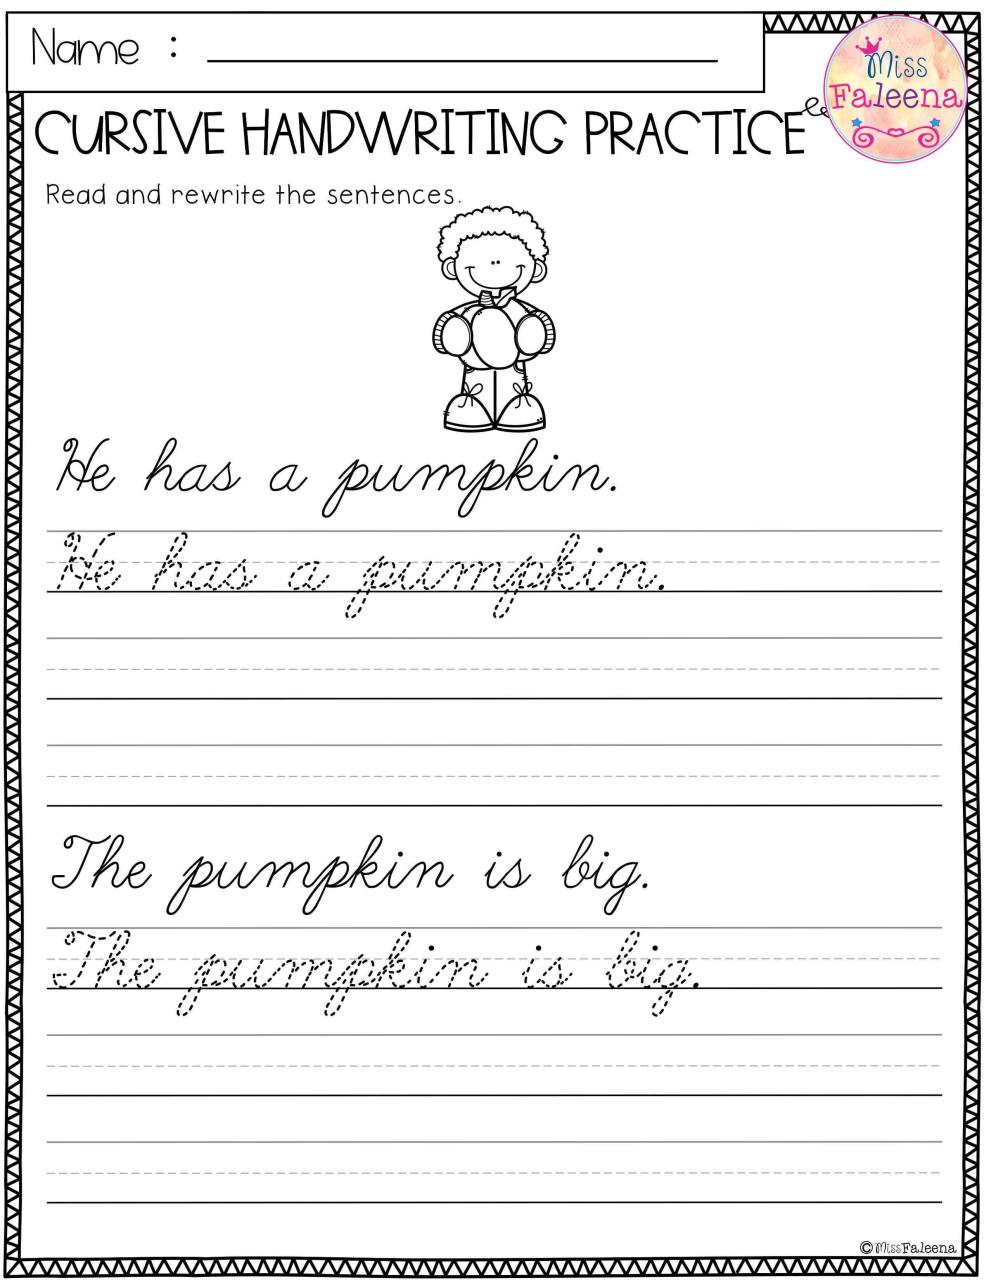 Children's Cursive Writing Practice Sheets